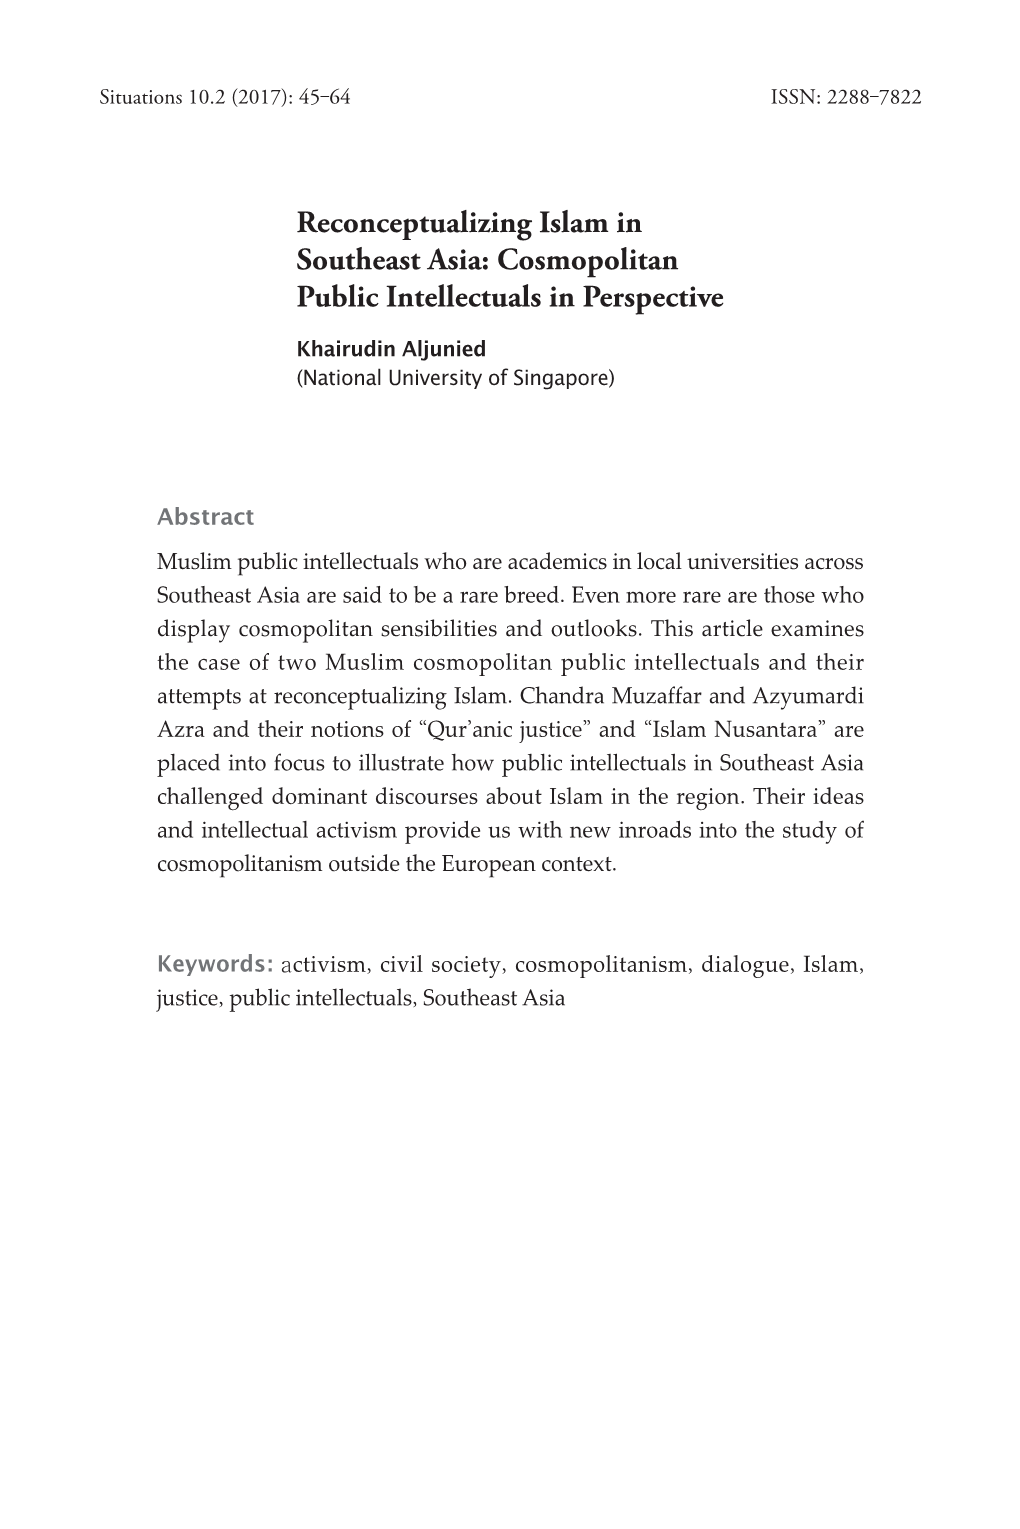 Reconceptualizing Islam in Southeast Asia: Cosmopolitan Public Intellectuals in Perspective